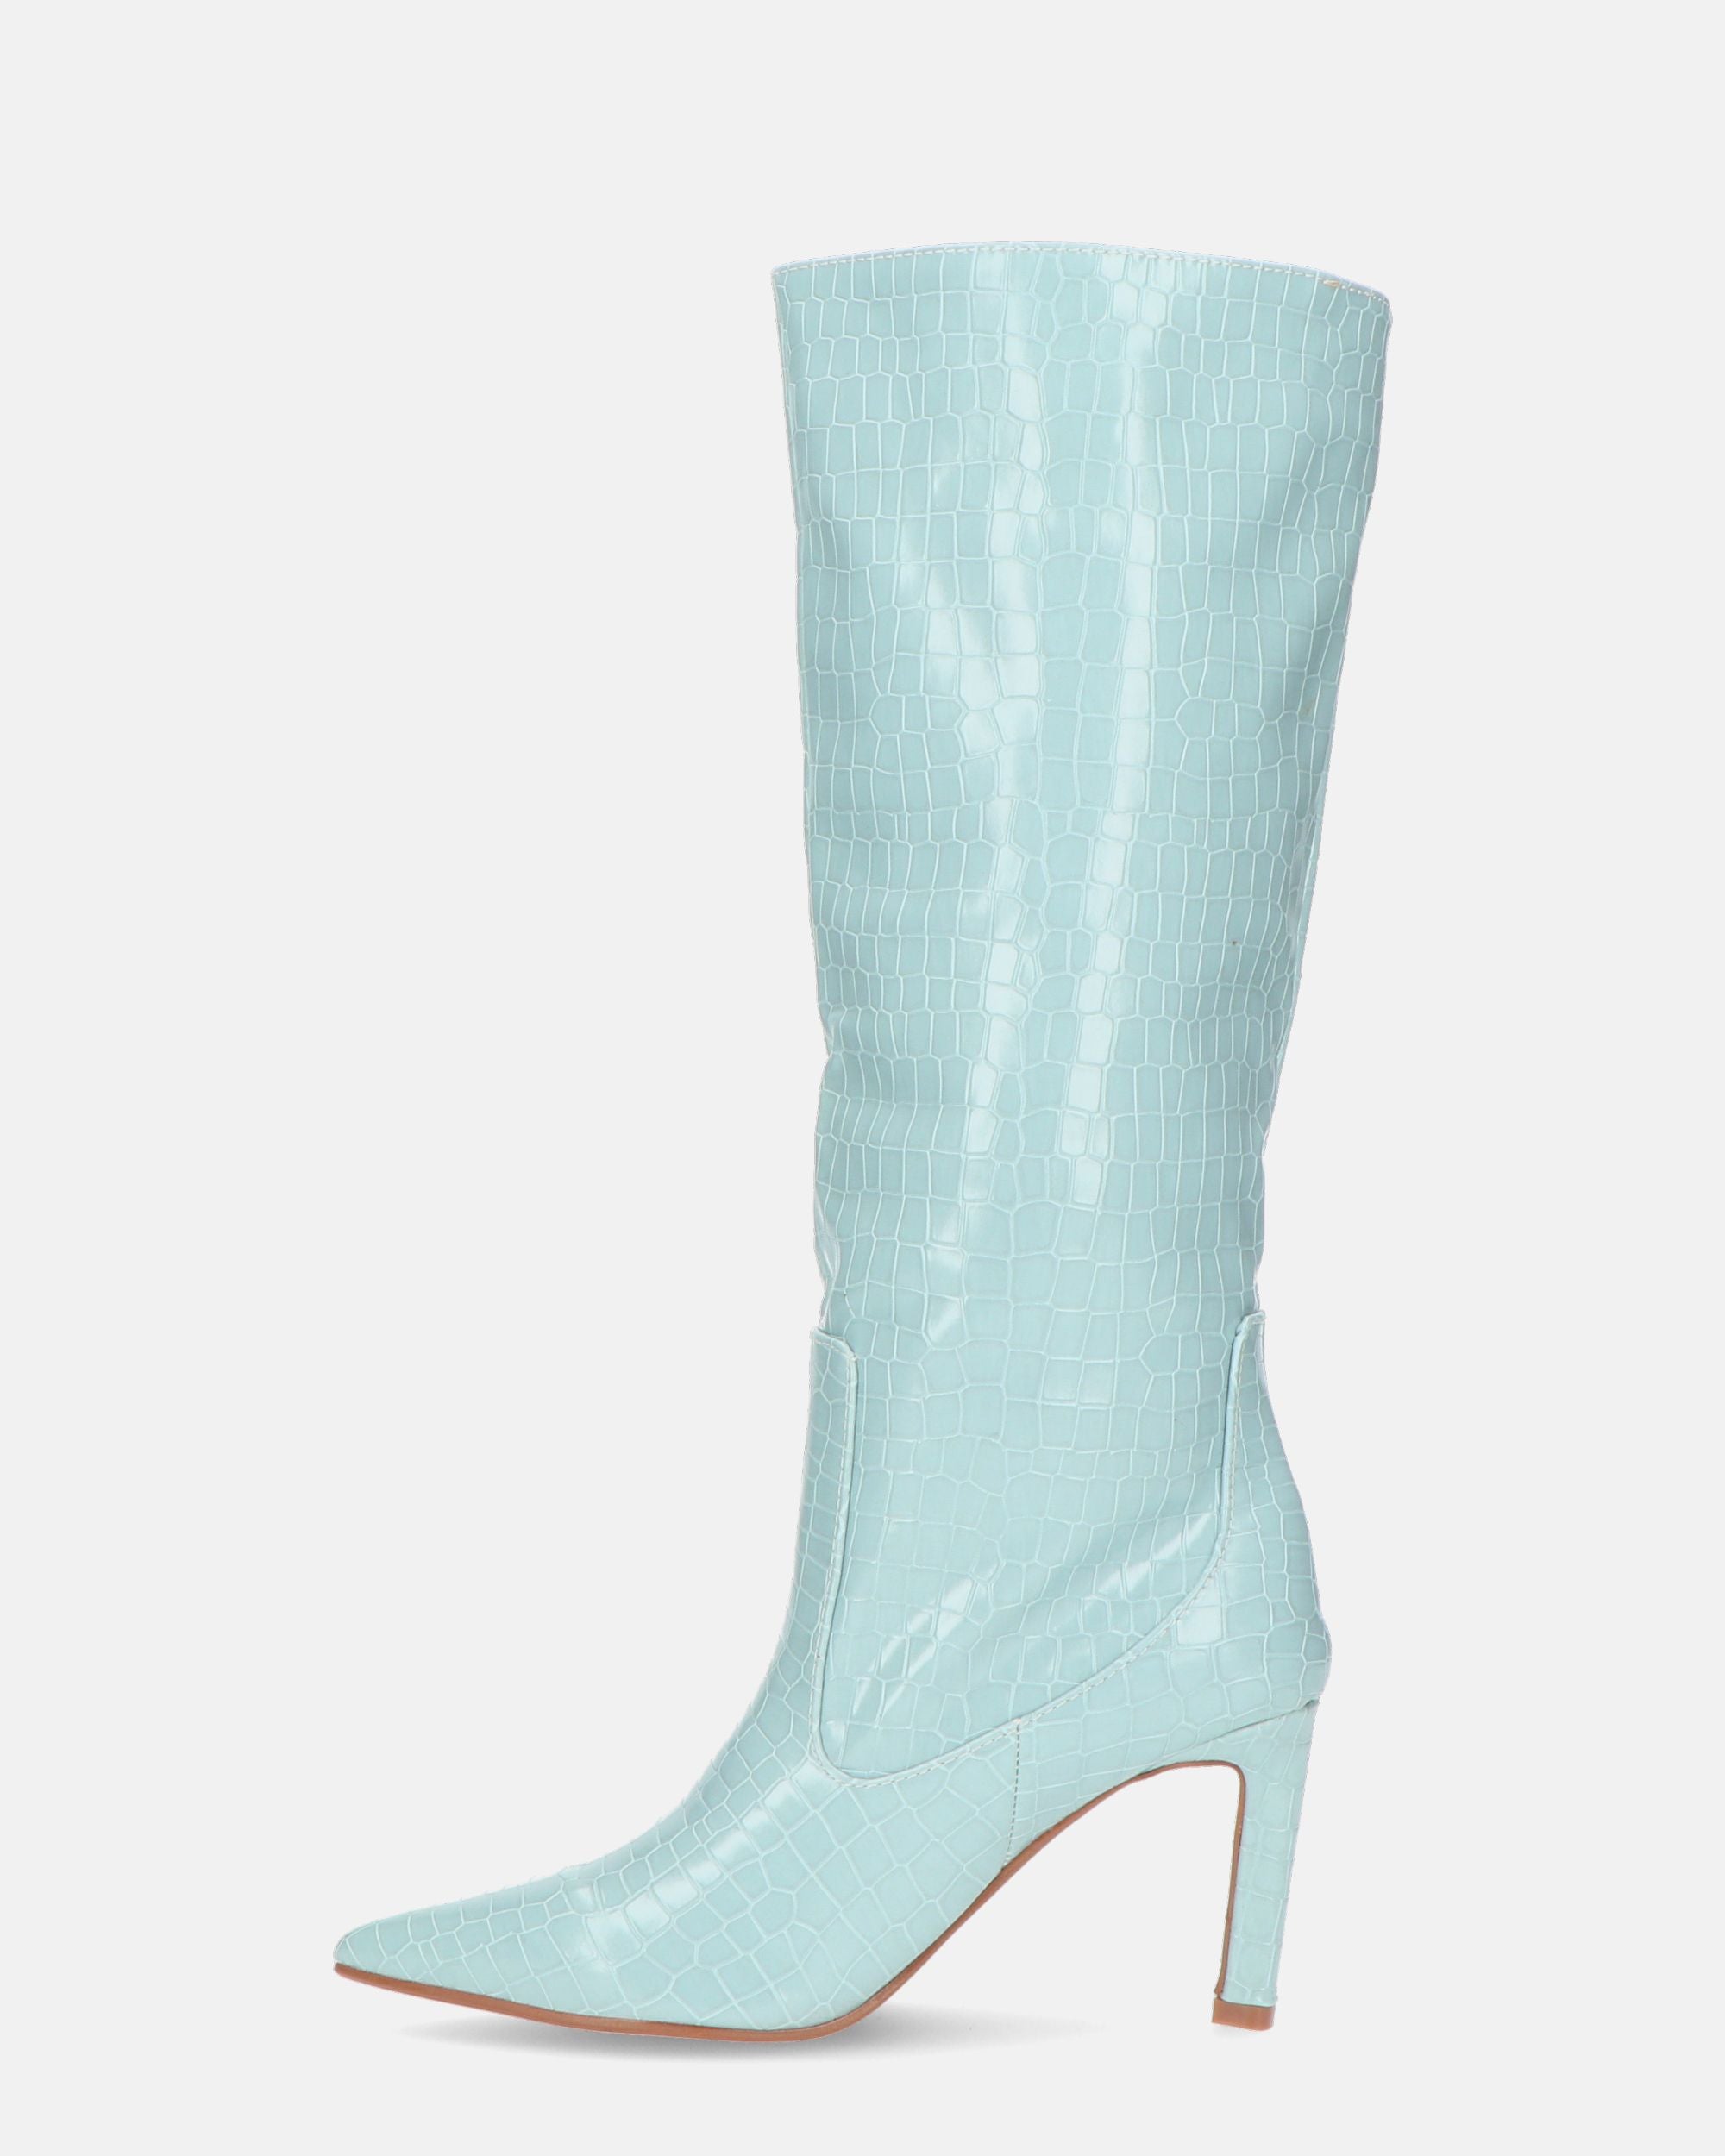 CAROLINE - long heeled boots in light blue crocodile